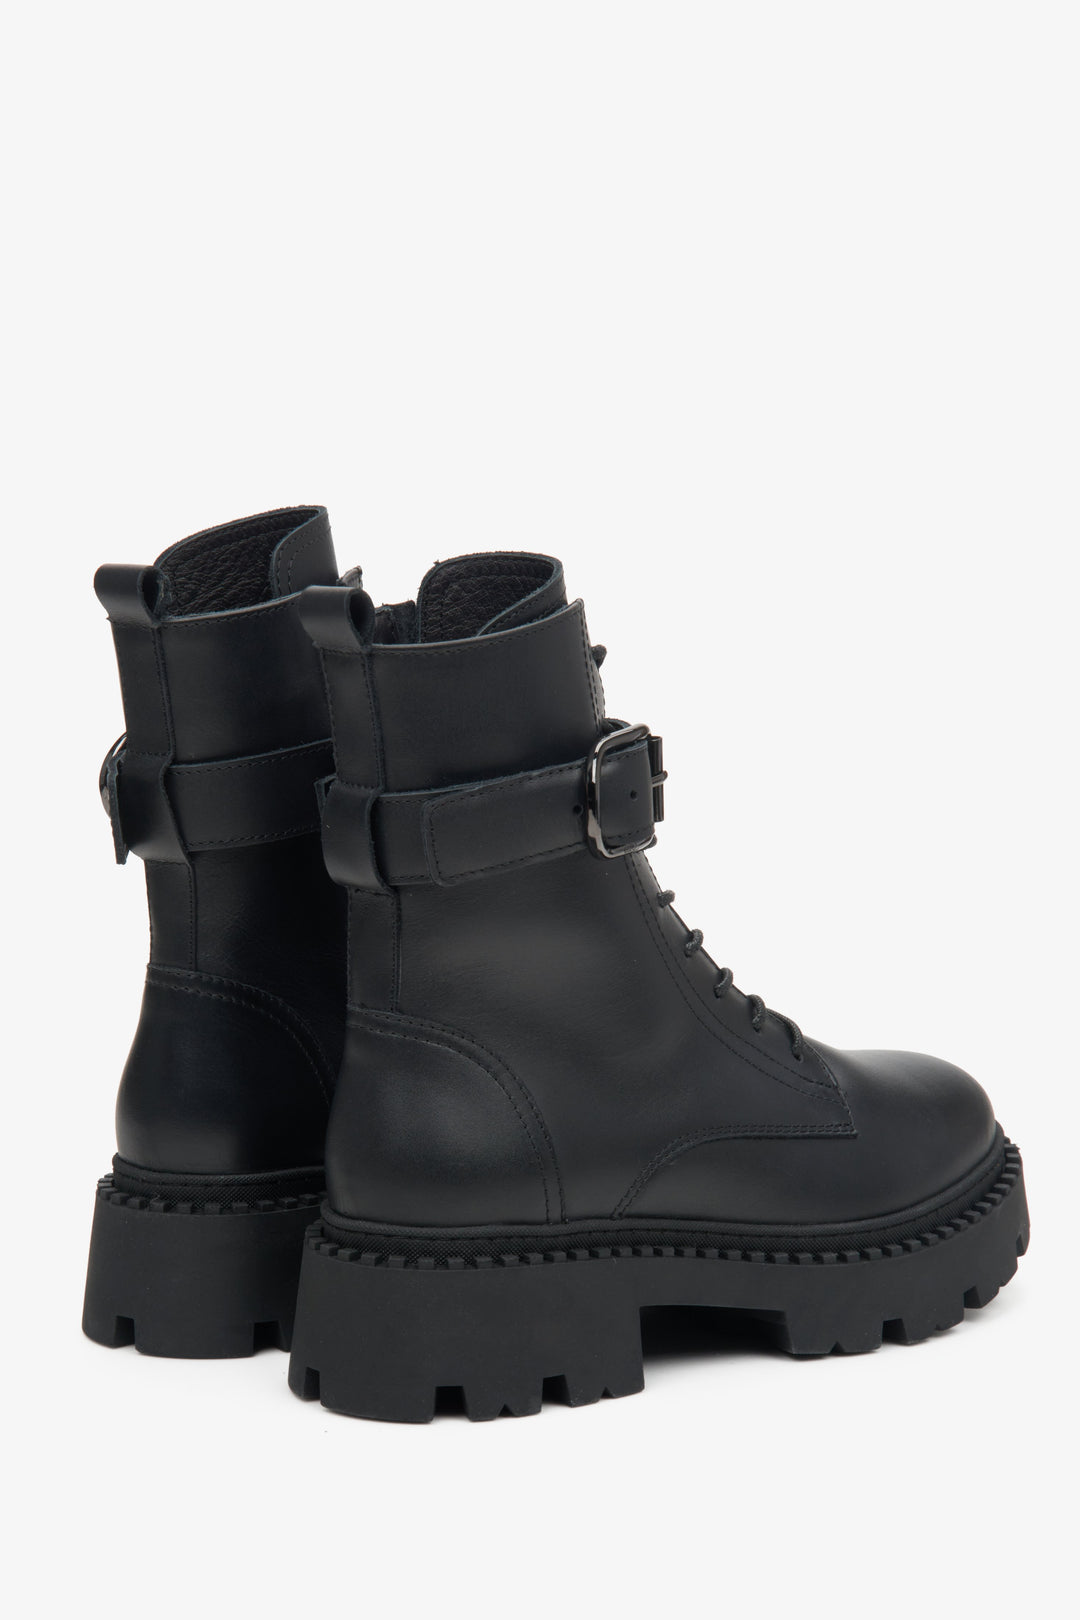 Women's black ankle boots for winter Estro.